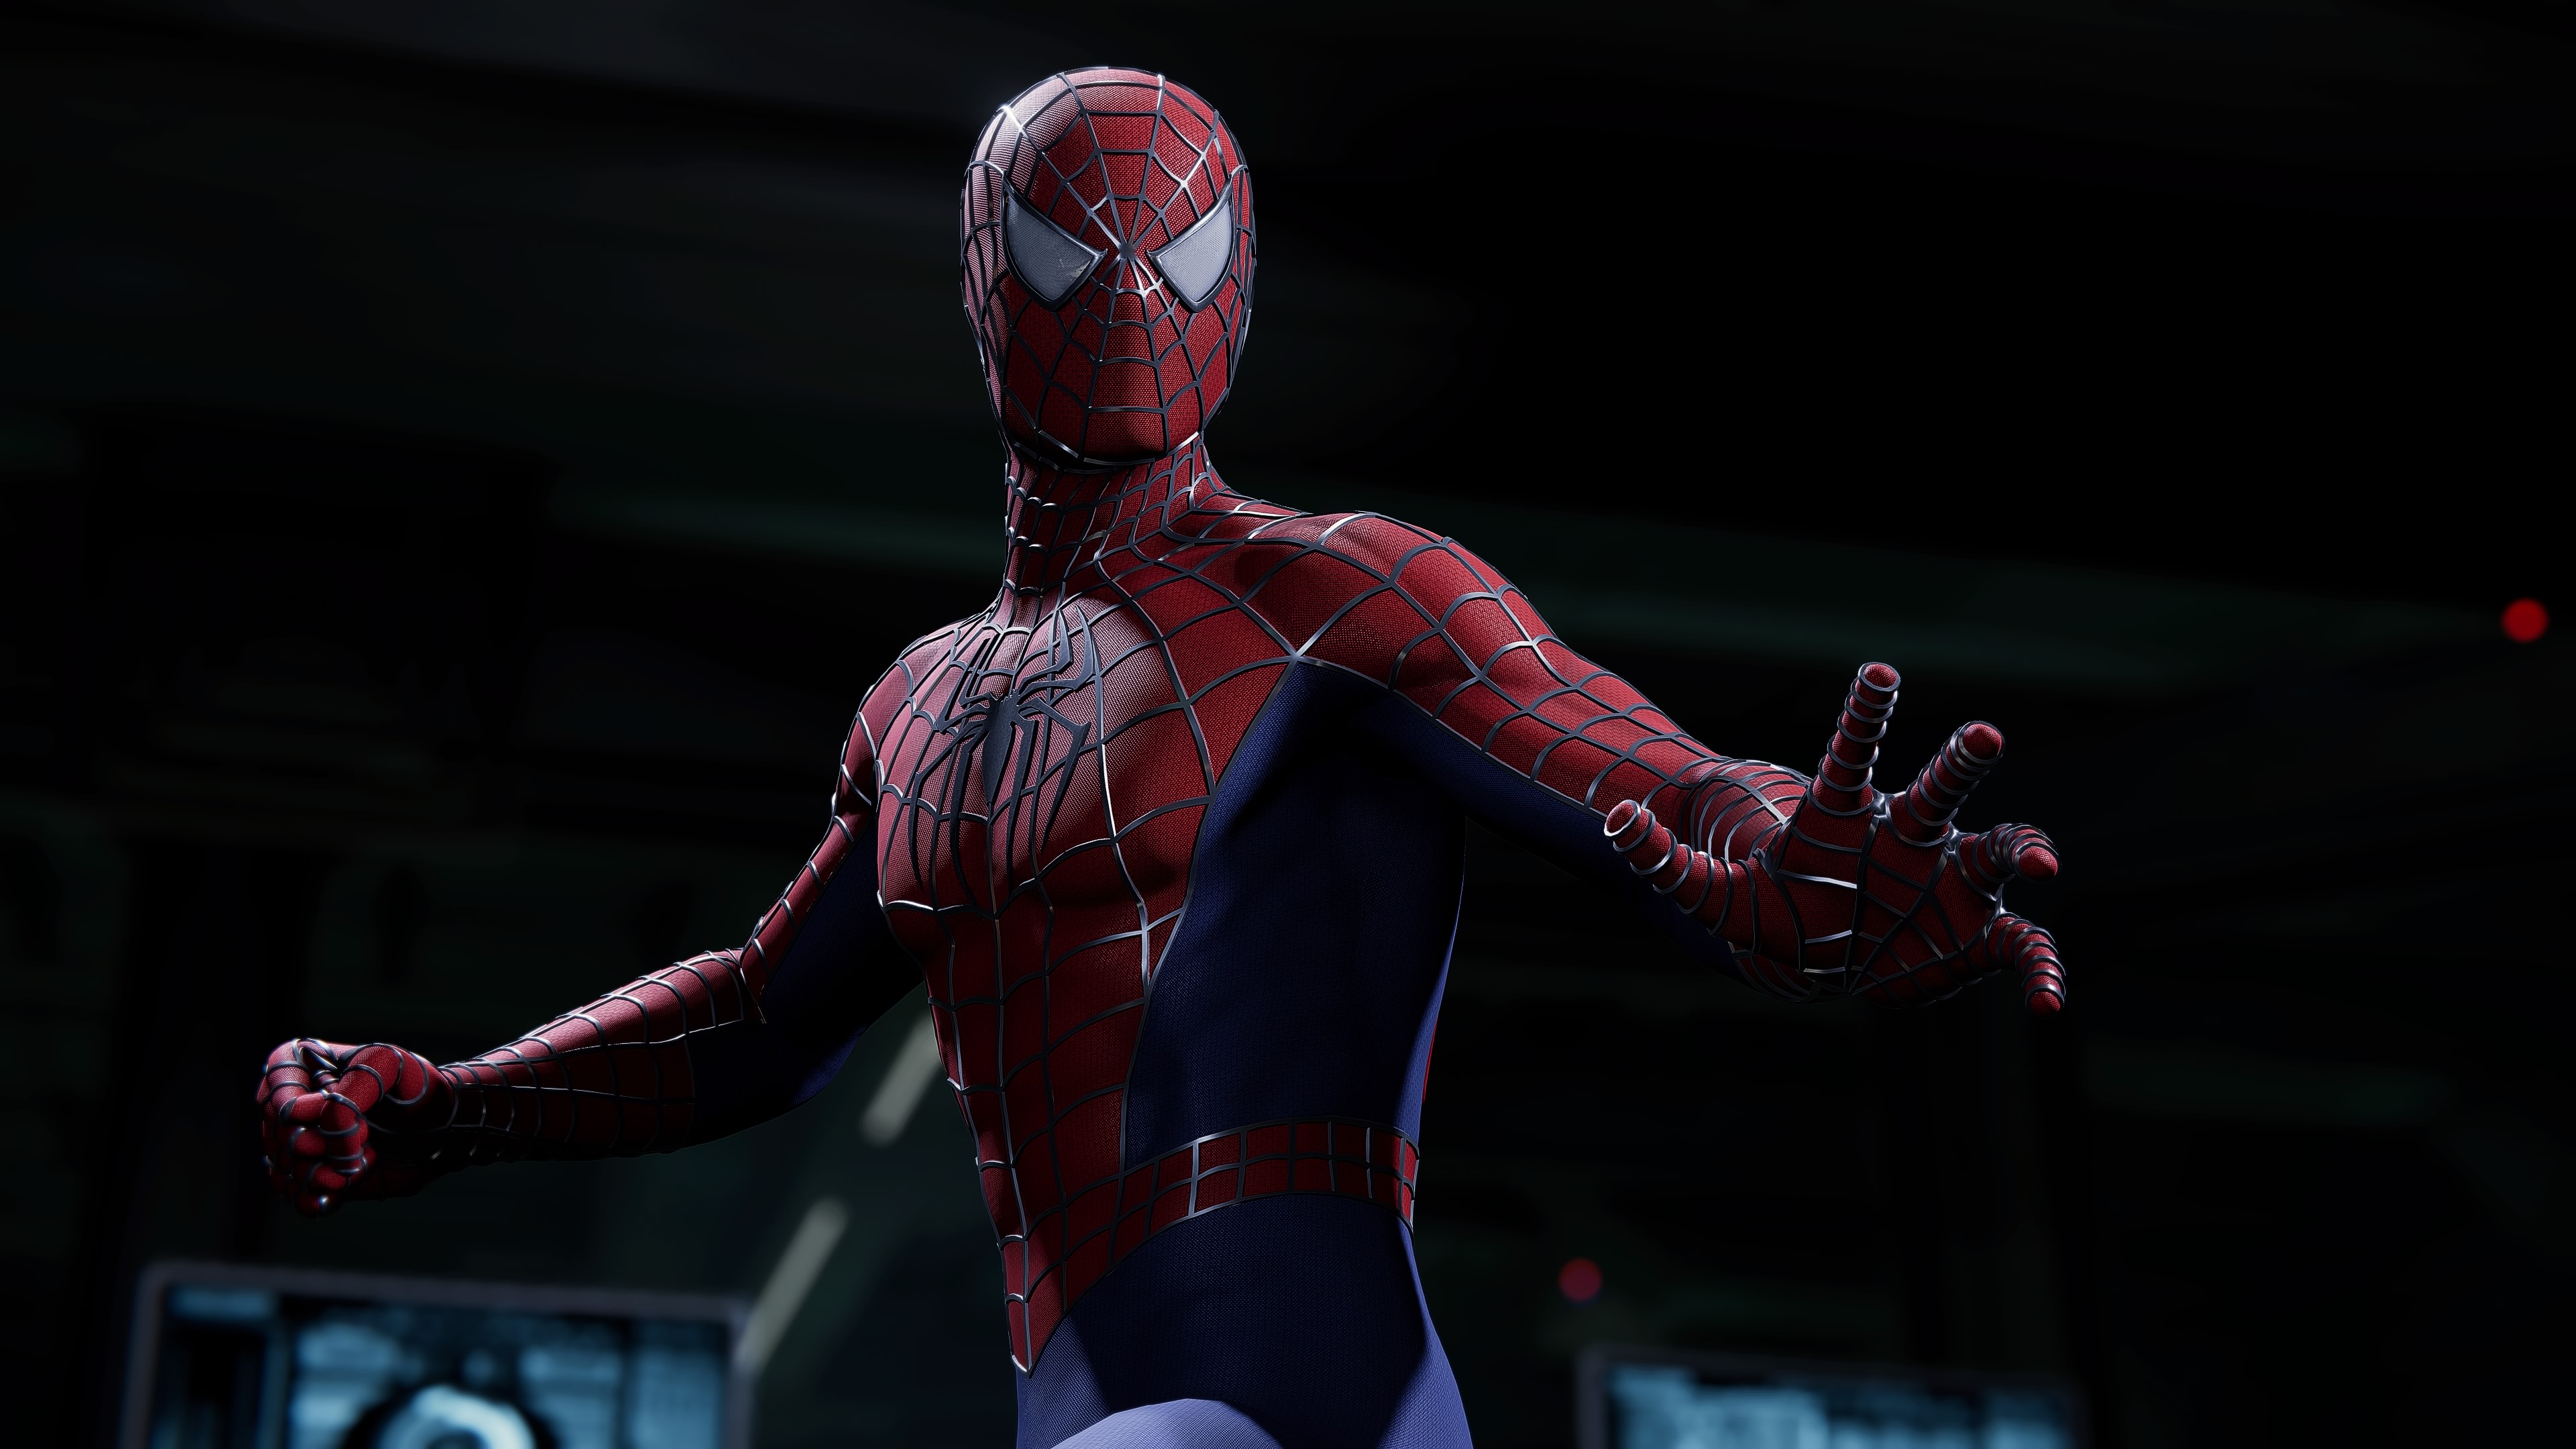 Spider Man Spider Man 2018 Peter Parker Marvel Comics Marvel Super Heroes PlayStation PlayStation 4  3840x2160